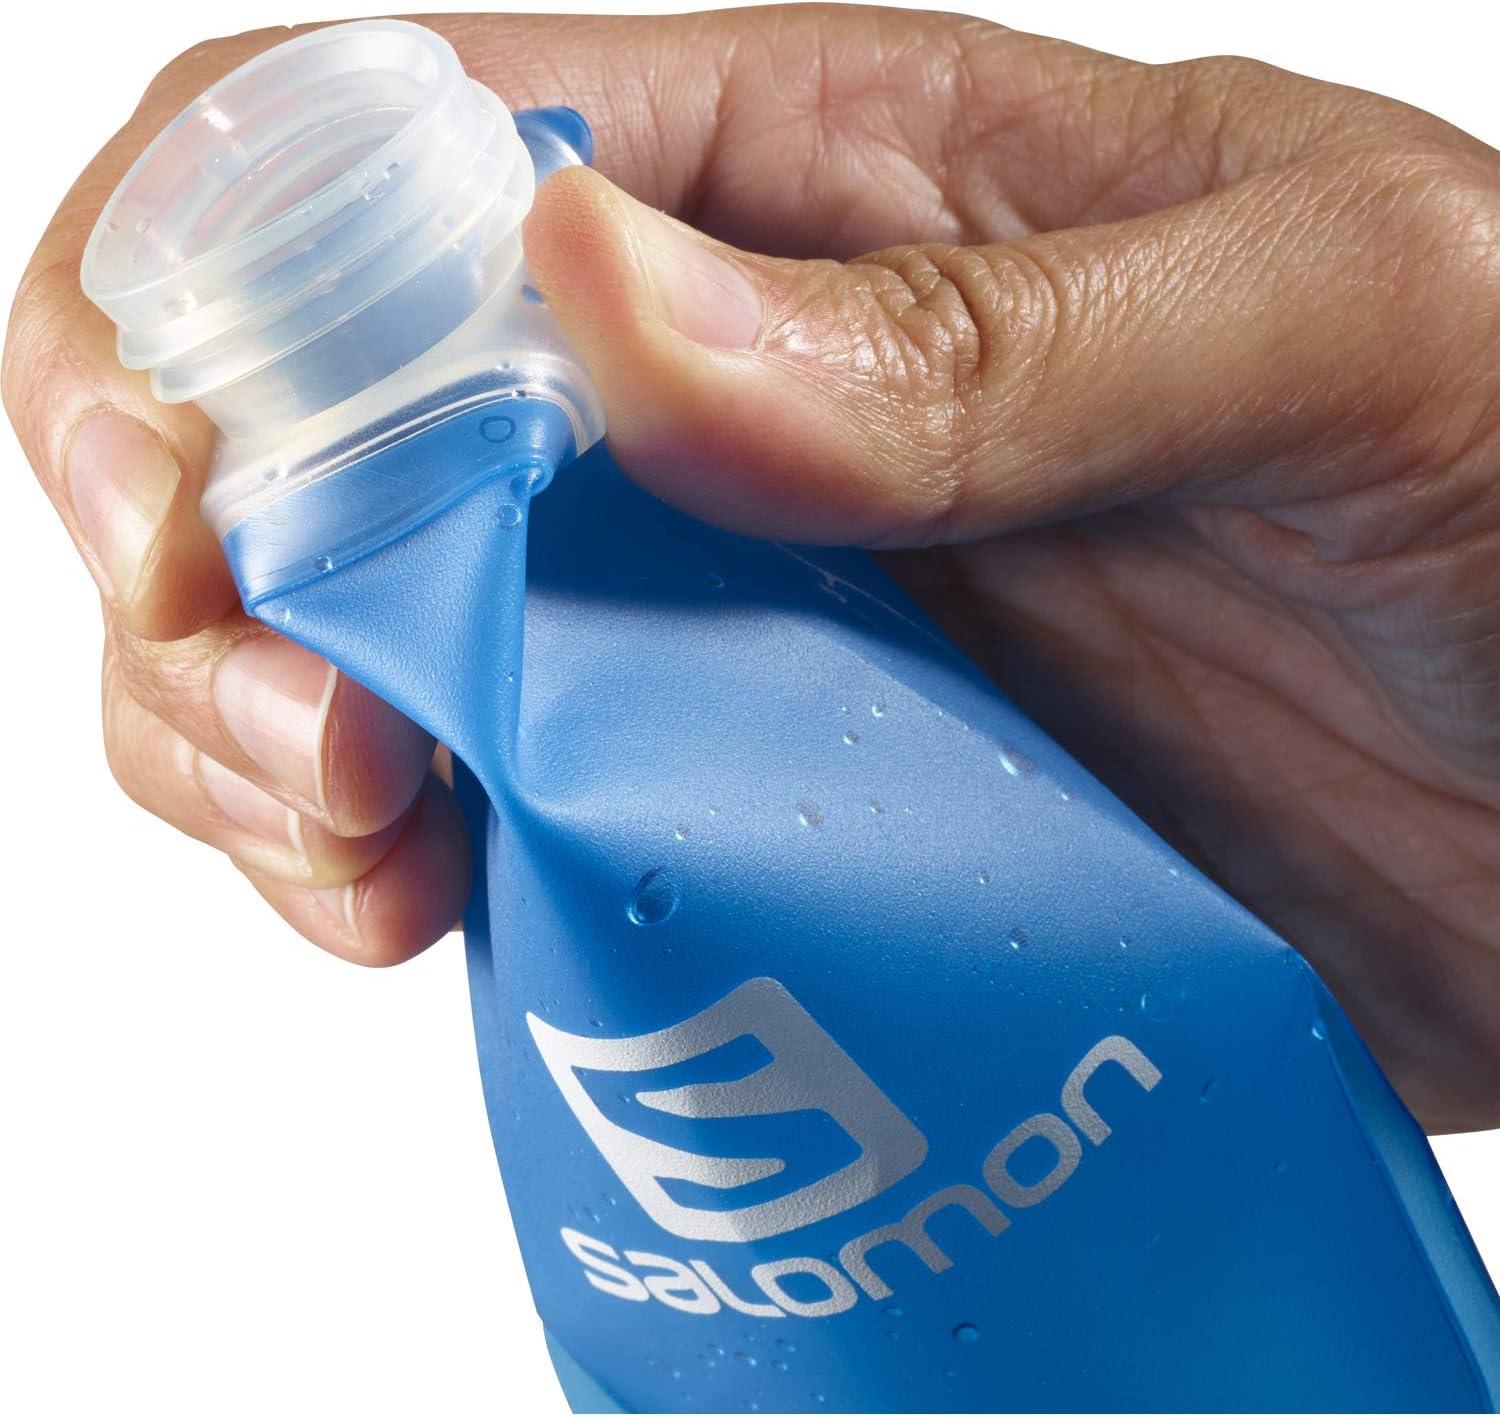 Salomon Soft Flask with Straw, 500ml, 17 oz 150 ml Clear Blue